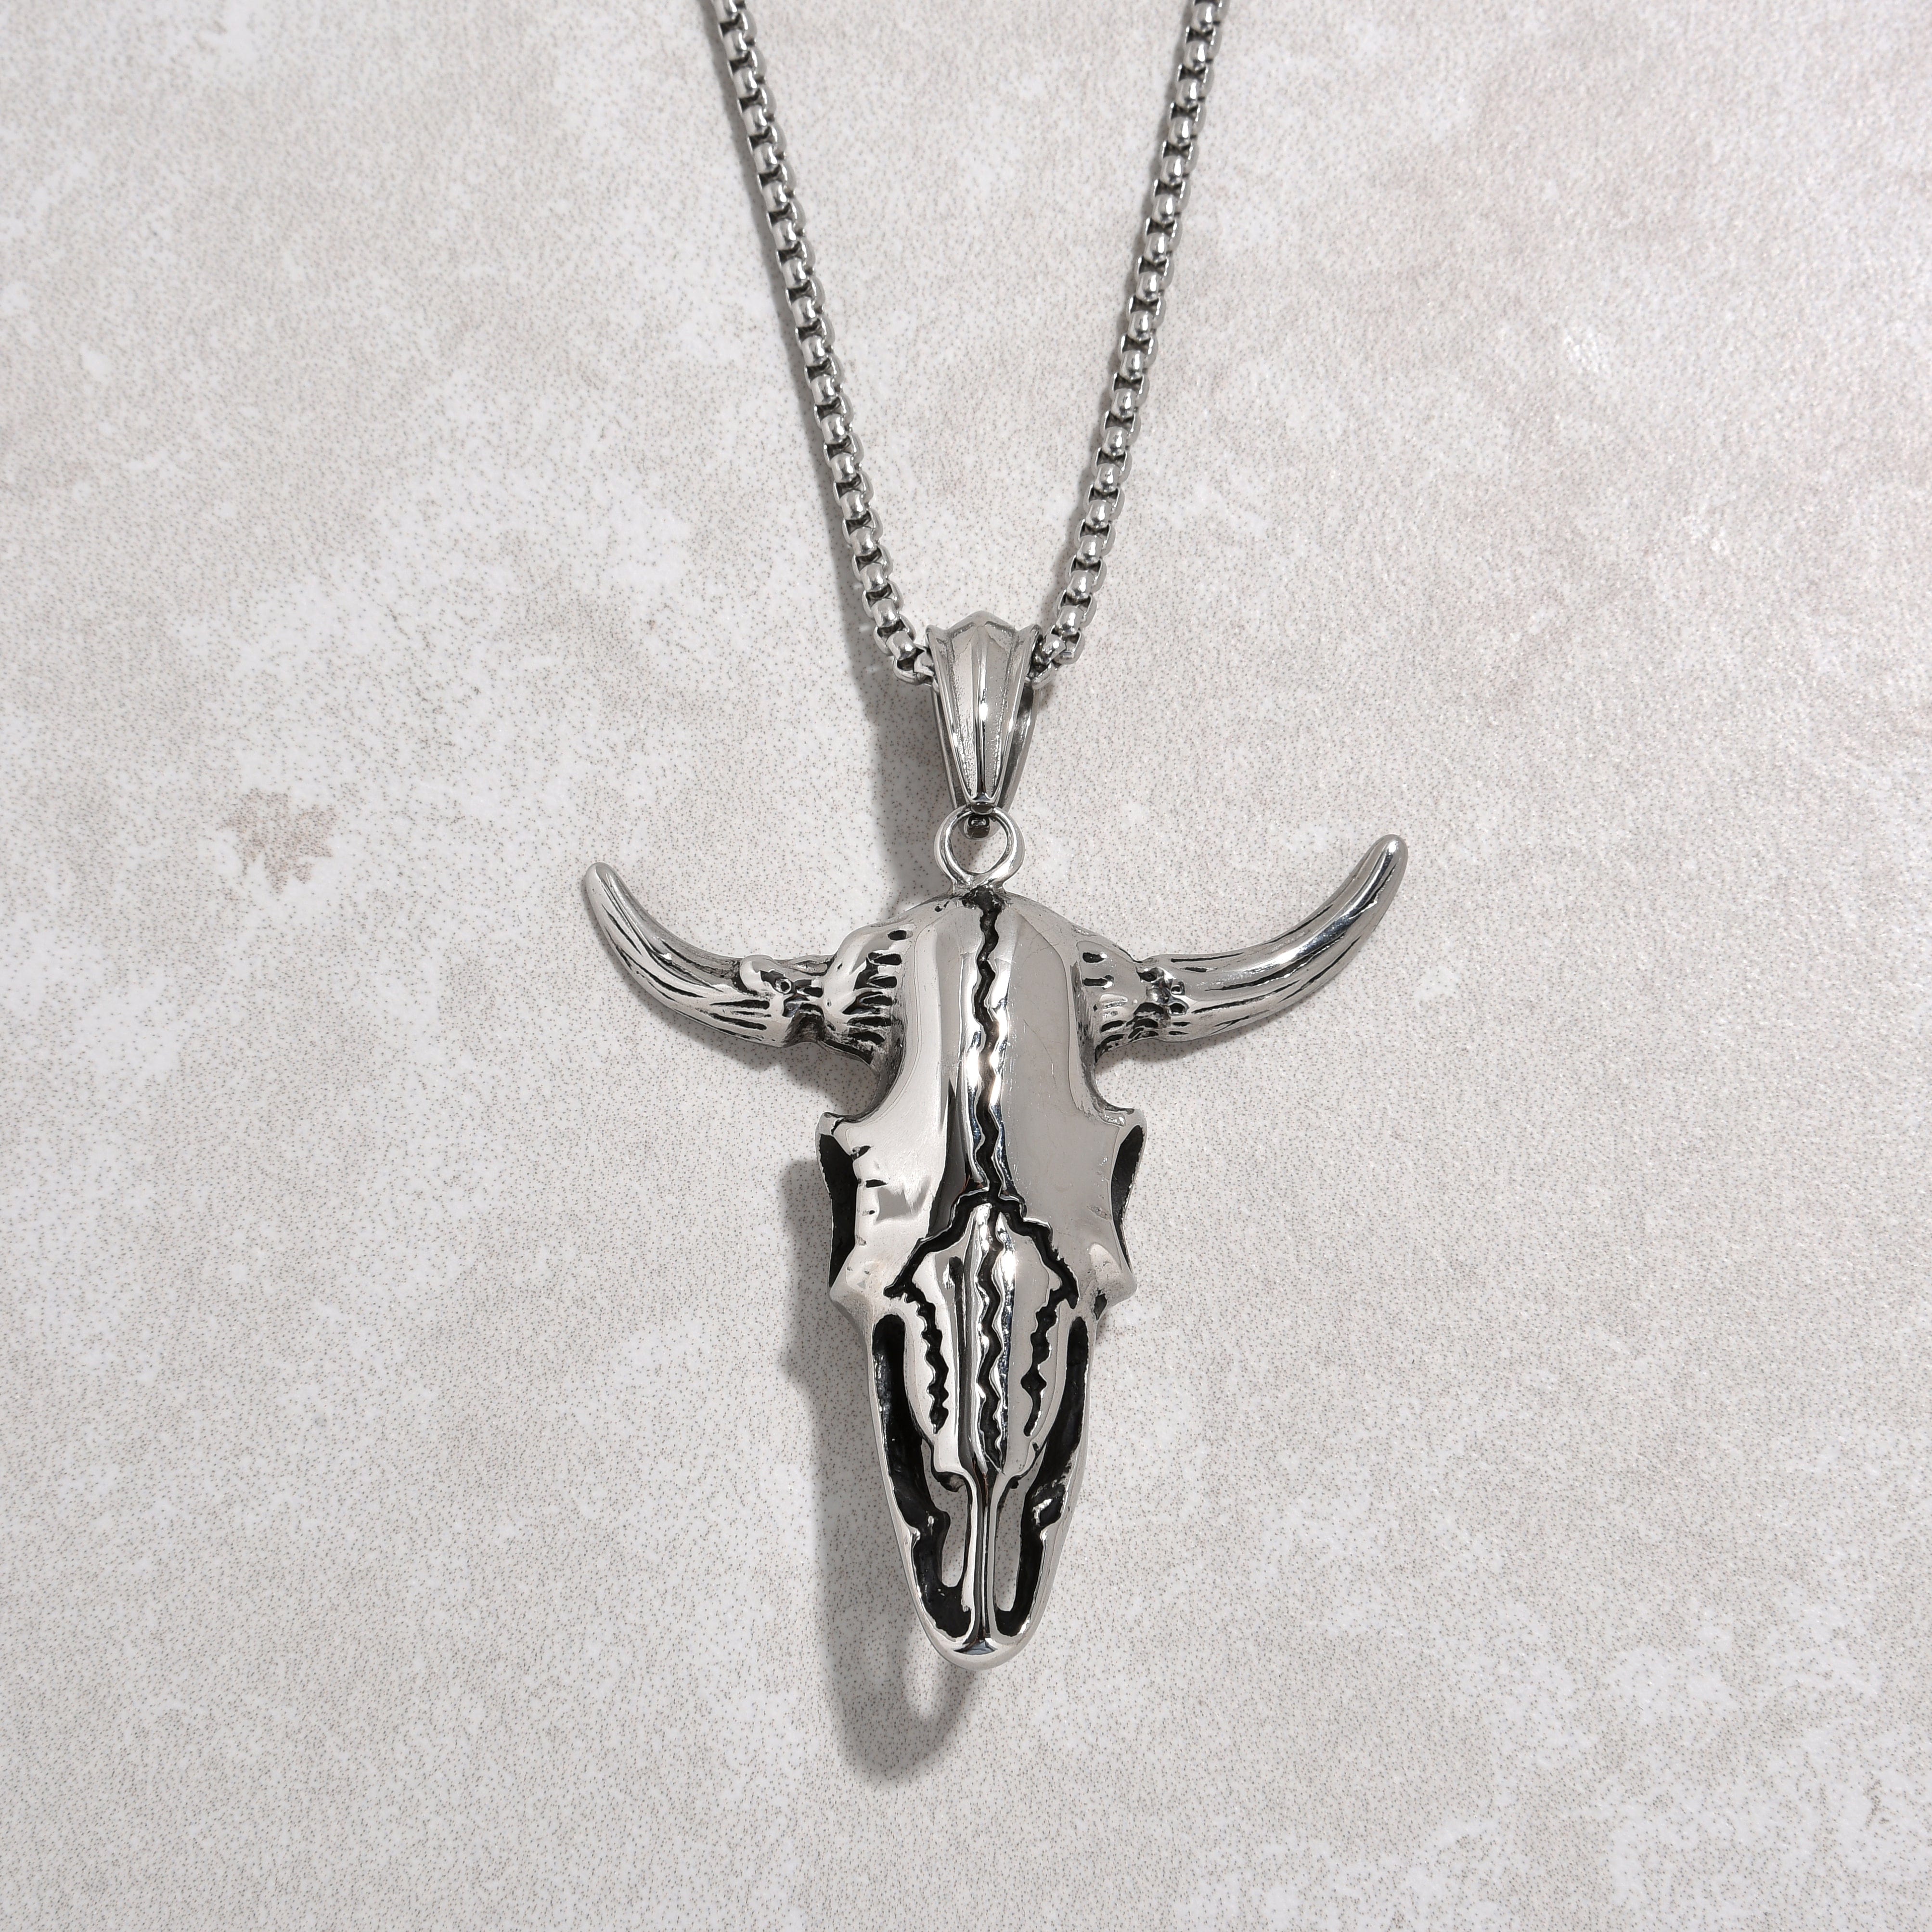 Kalifano Steel Hearts Jewelry Silver Large Bull Skull Steel Hearts Necklace SHN529-S